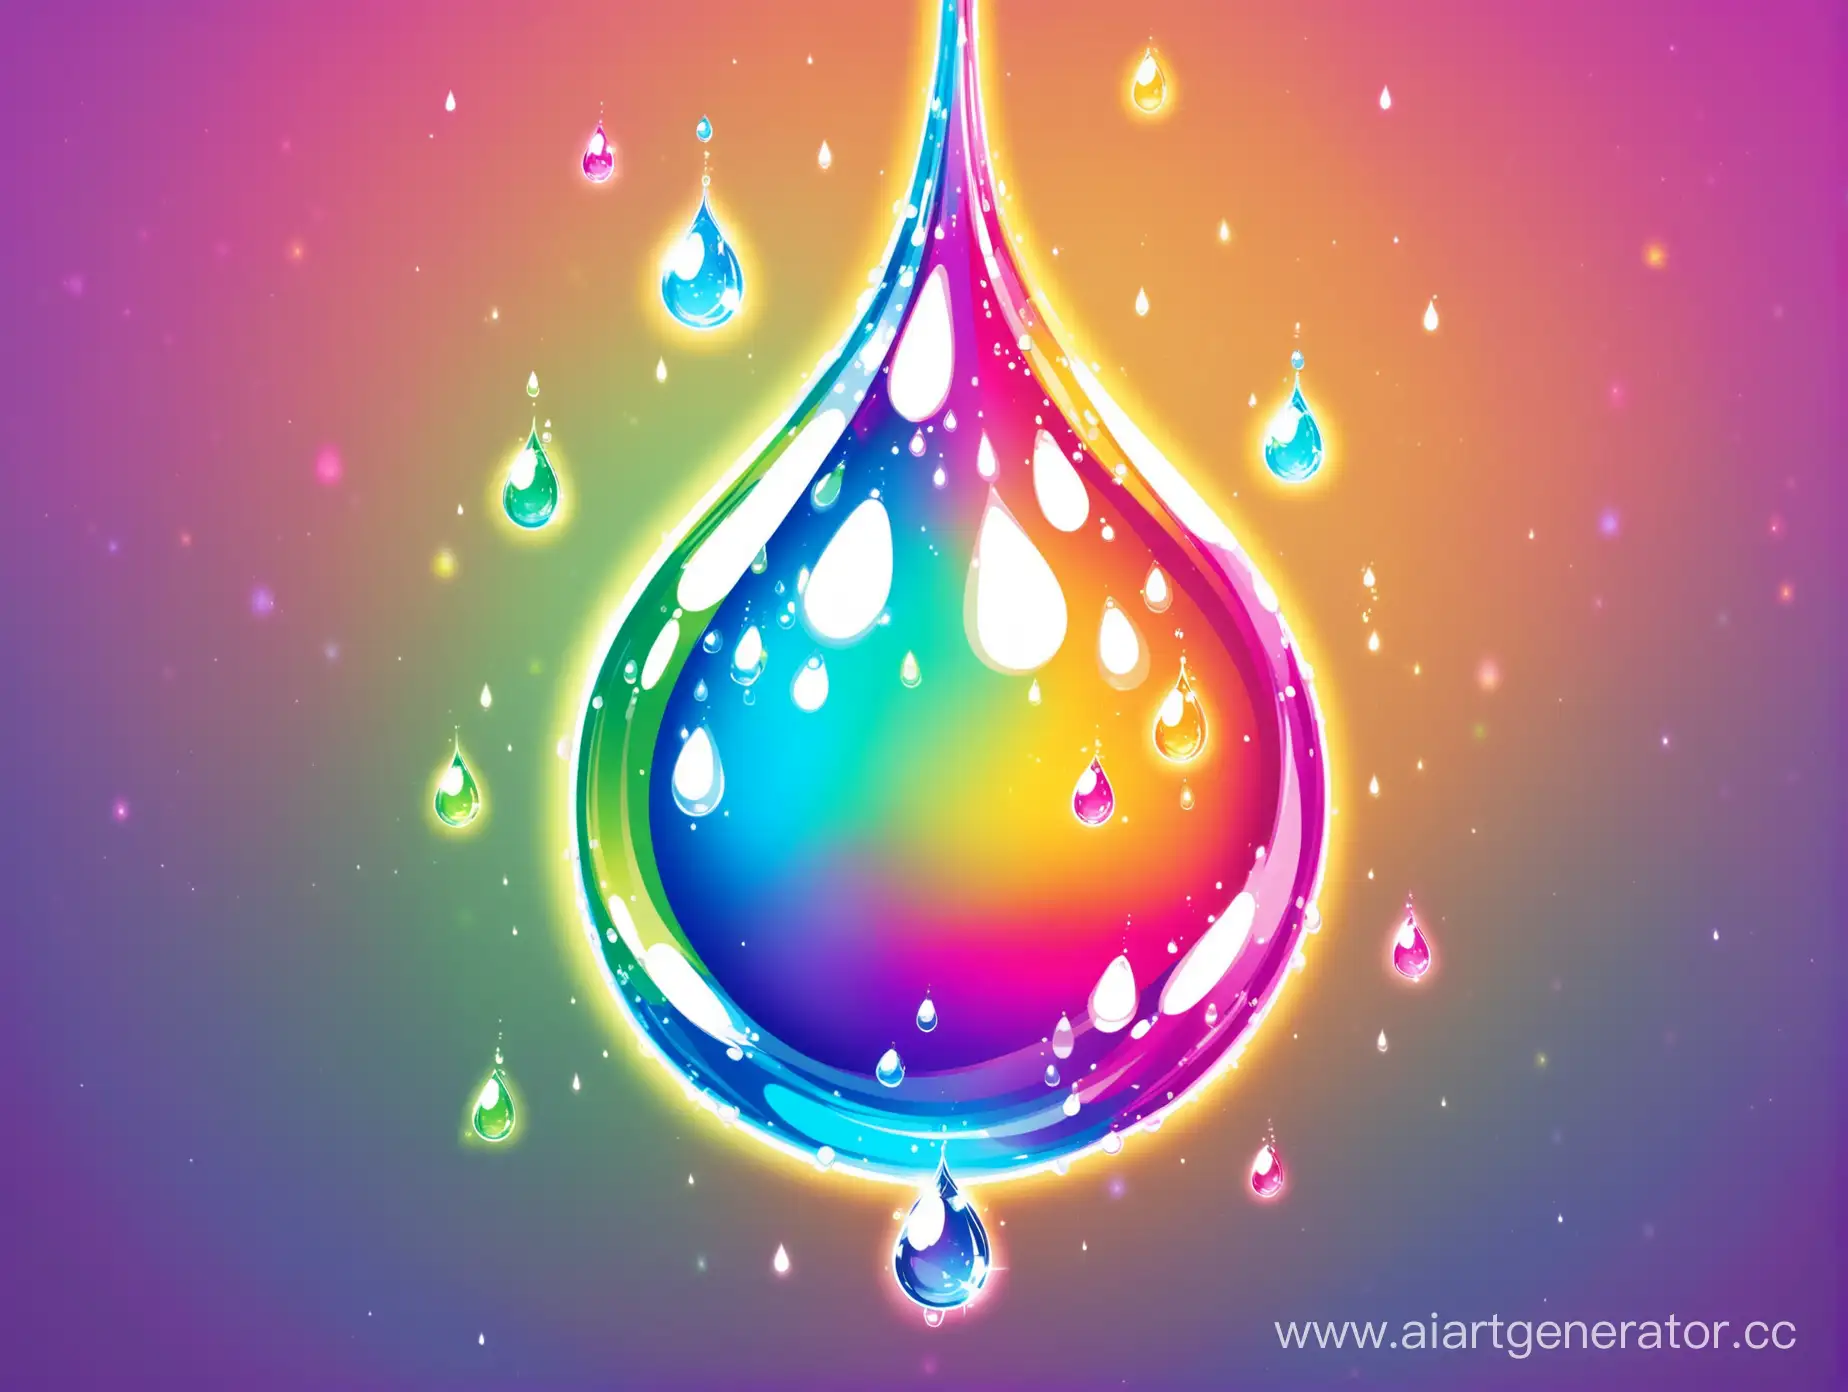 Vibrant-Abstract-Drops-Splashing-in-Joyful-Colorful-Dance